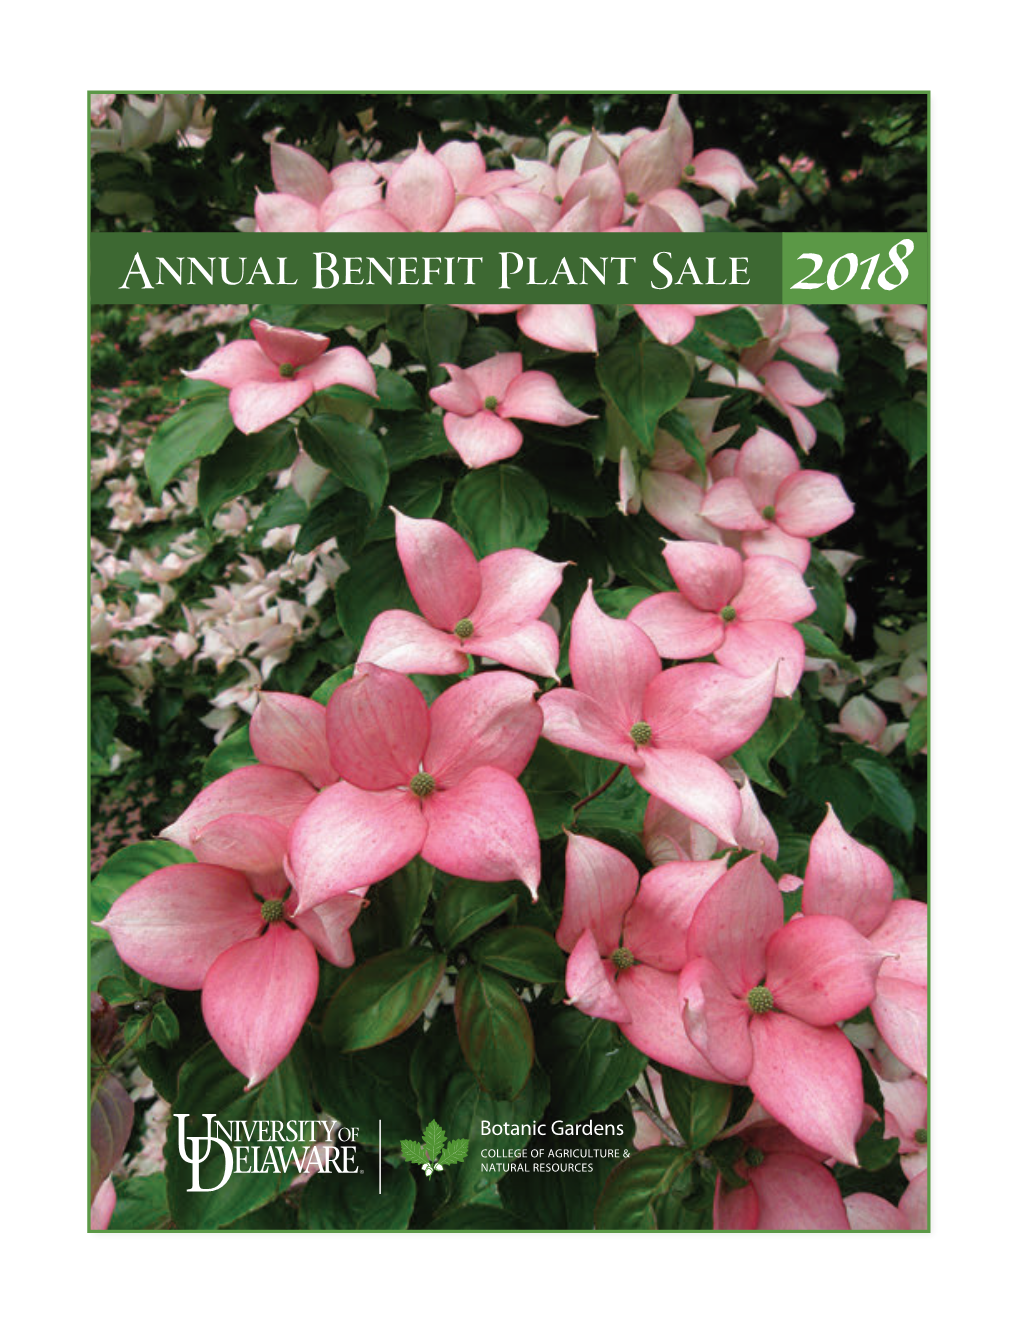 Annual Benefit Plant Sale 2018